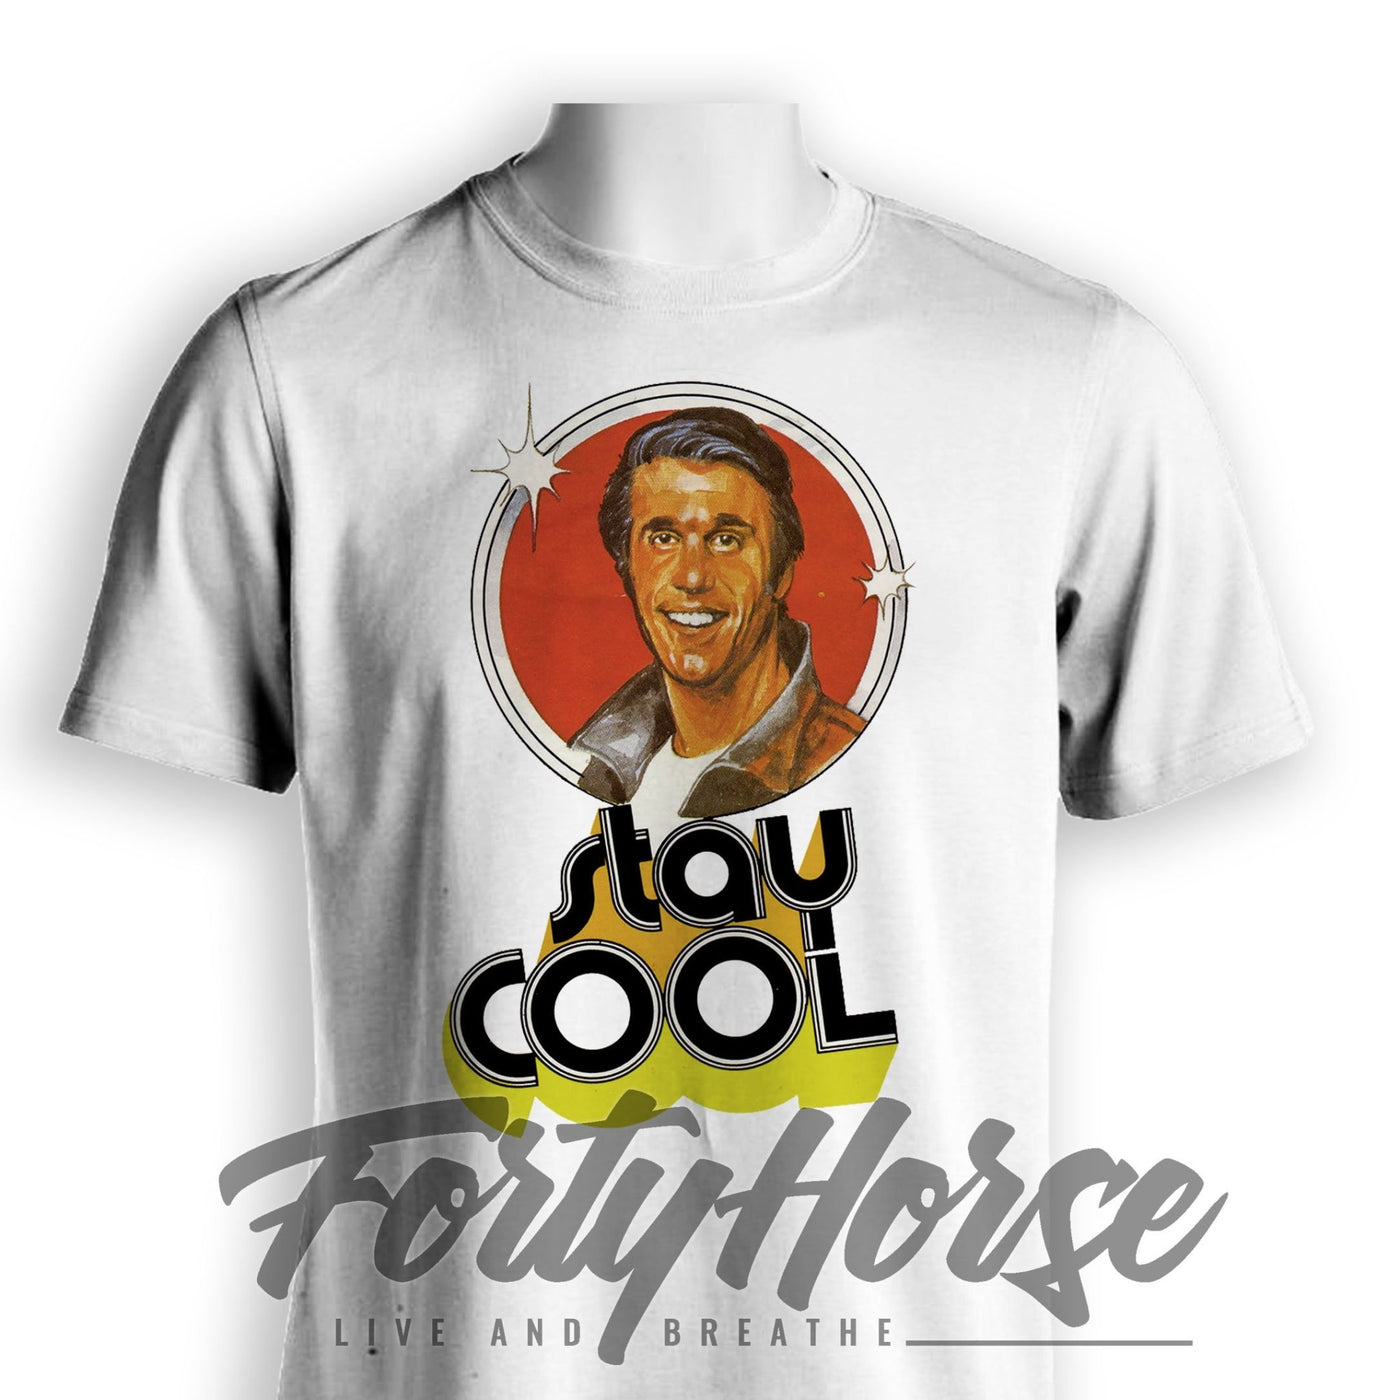 Fonz Shirt - Stay Cool